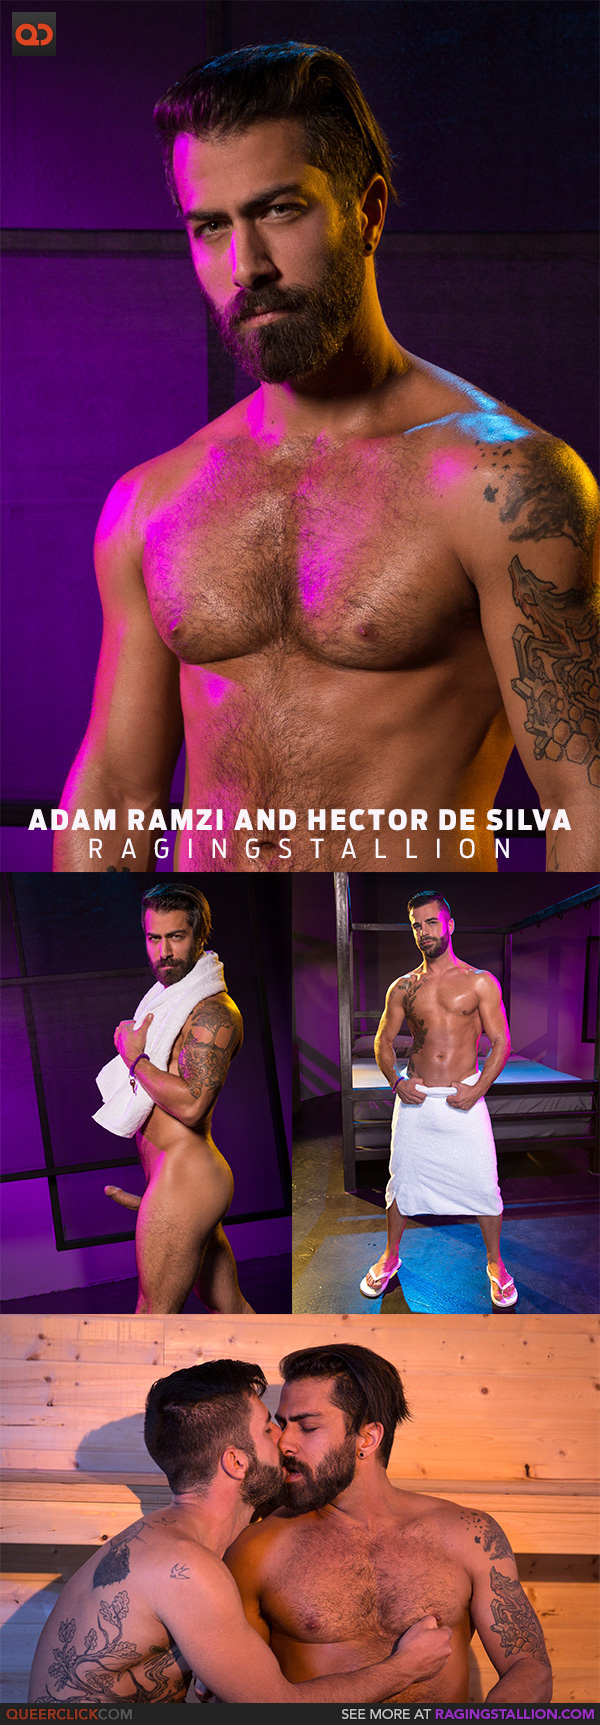 Raging Stallion: Adam Ramzi and Hector de Silva